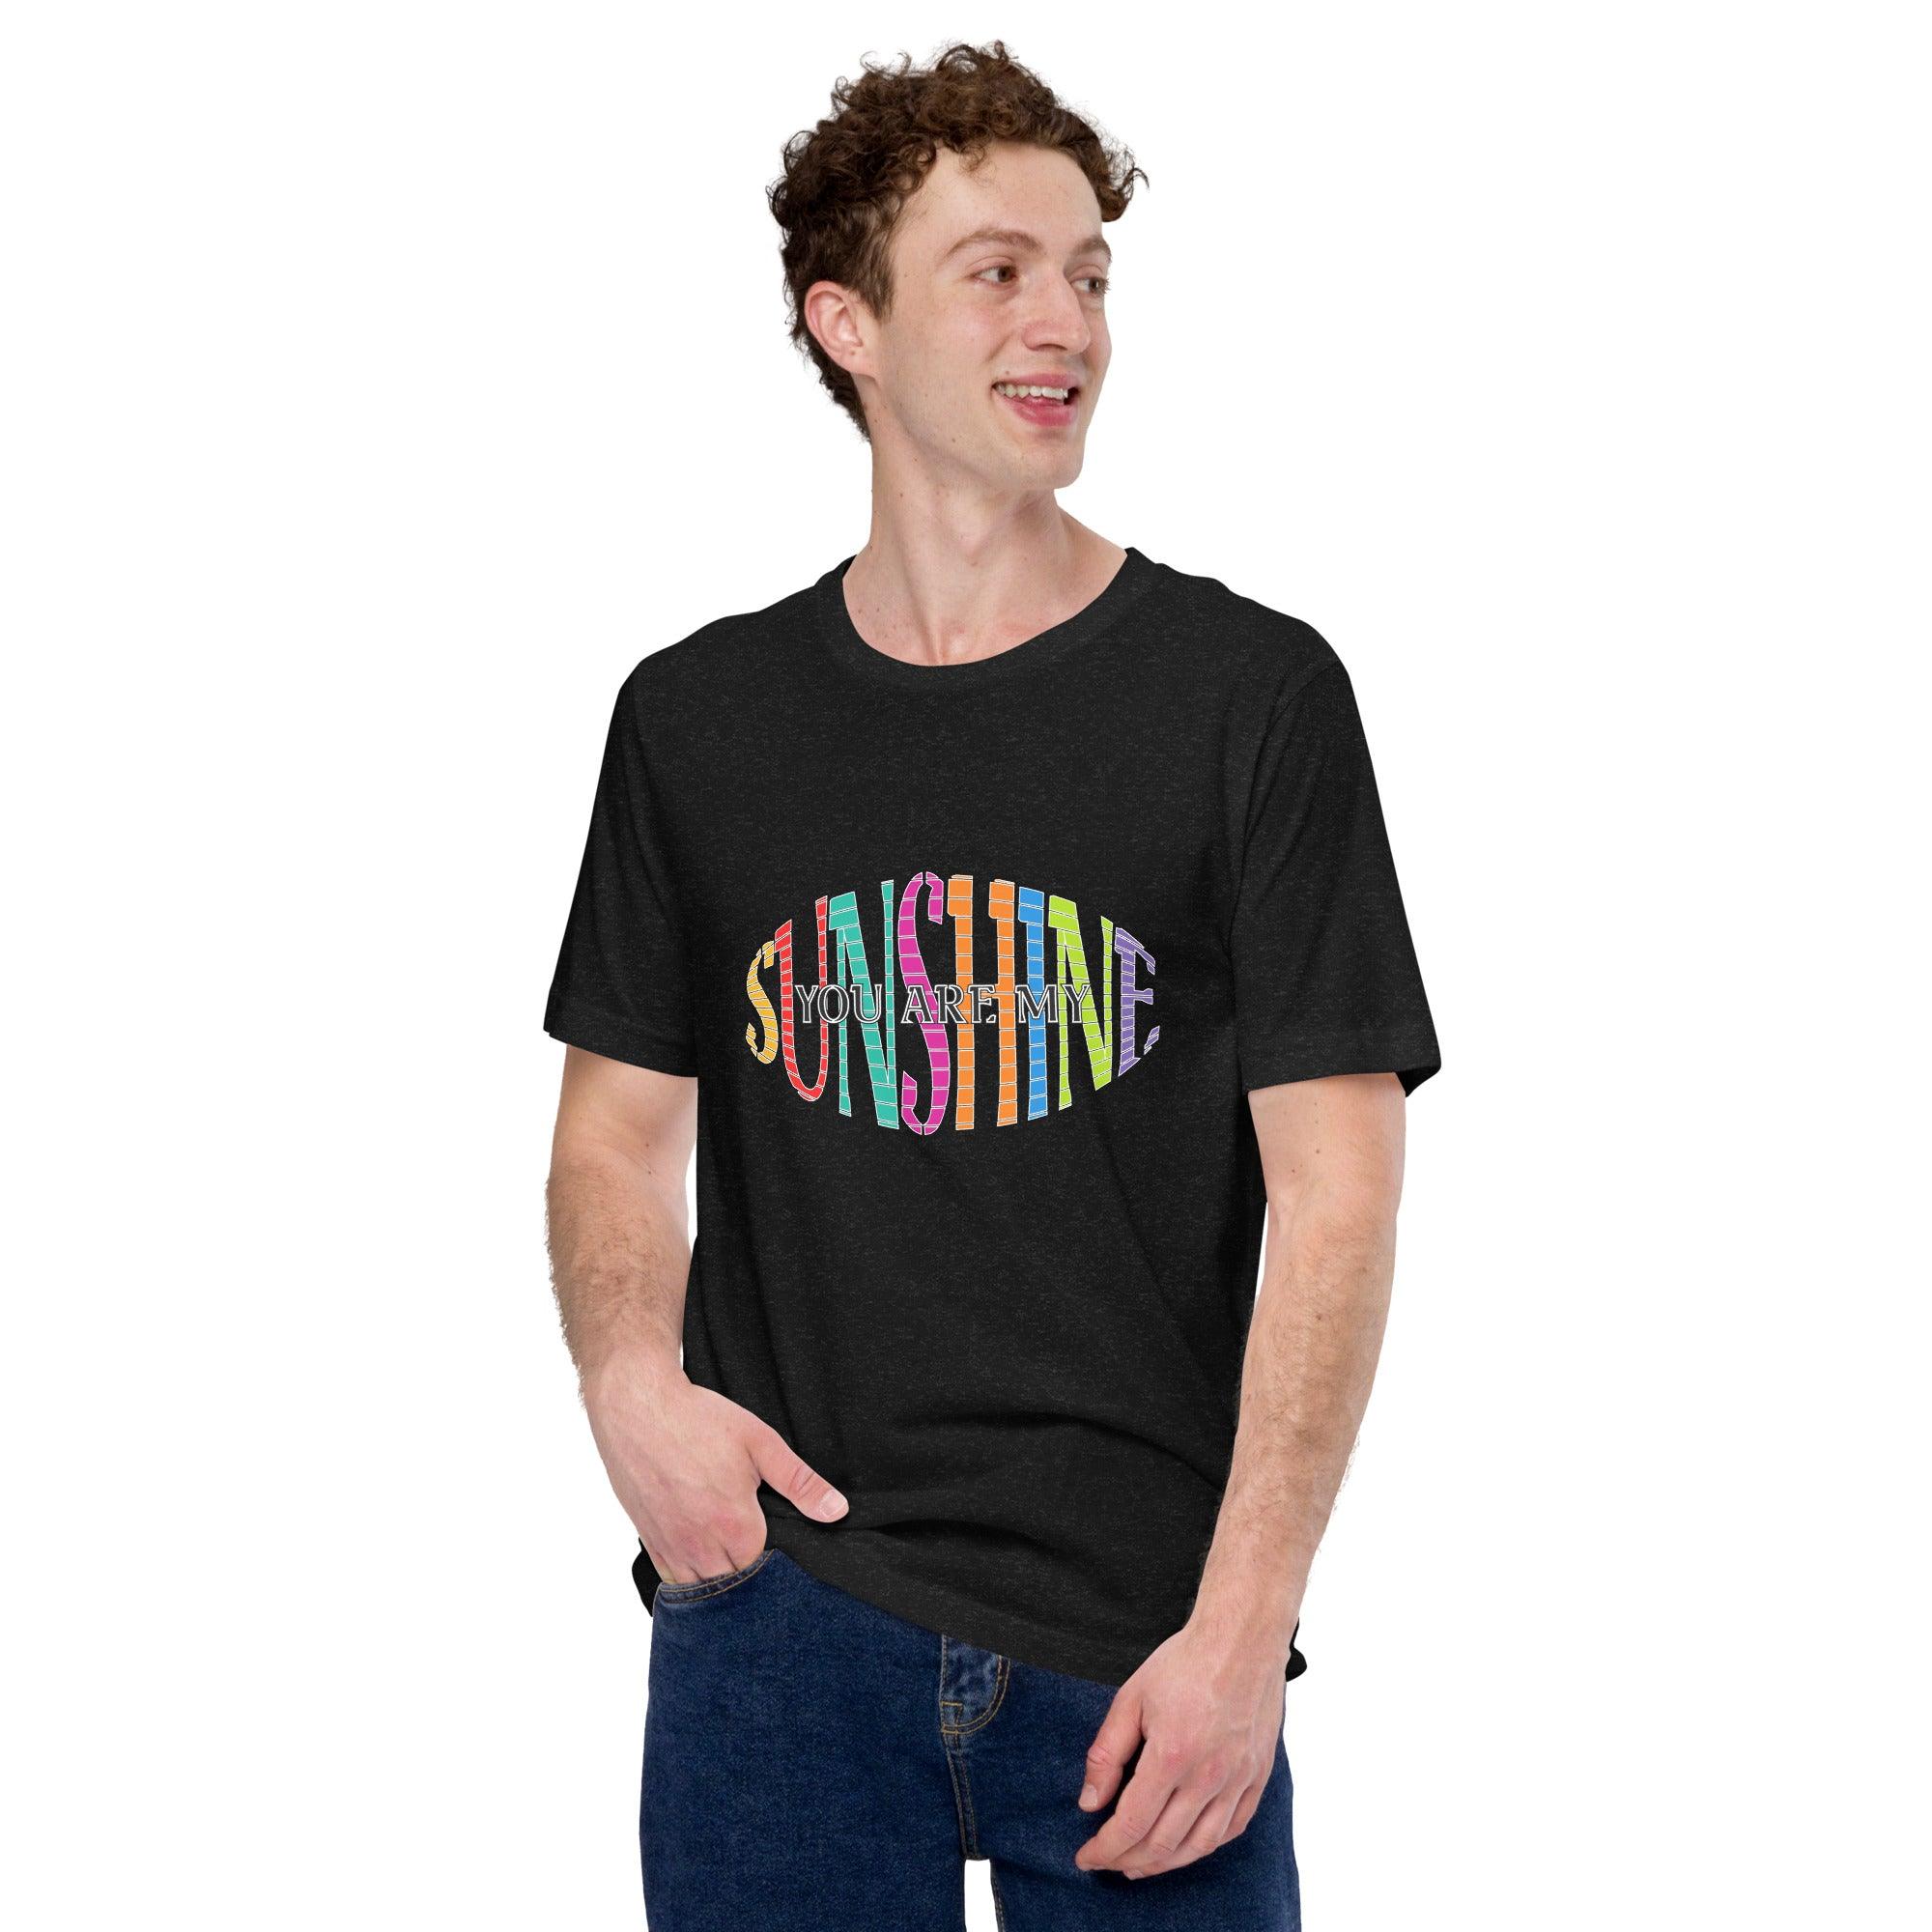 Soulmate Connection Unisex Love T-Shirt - Beyond T-shirts